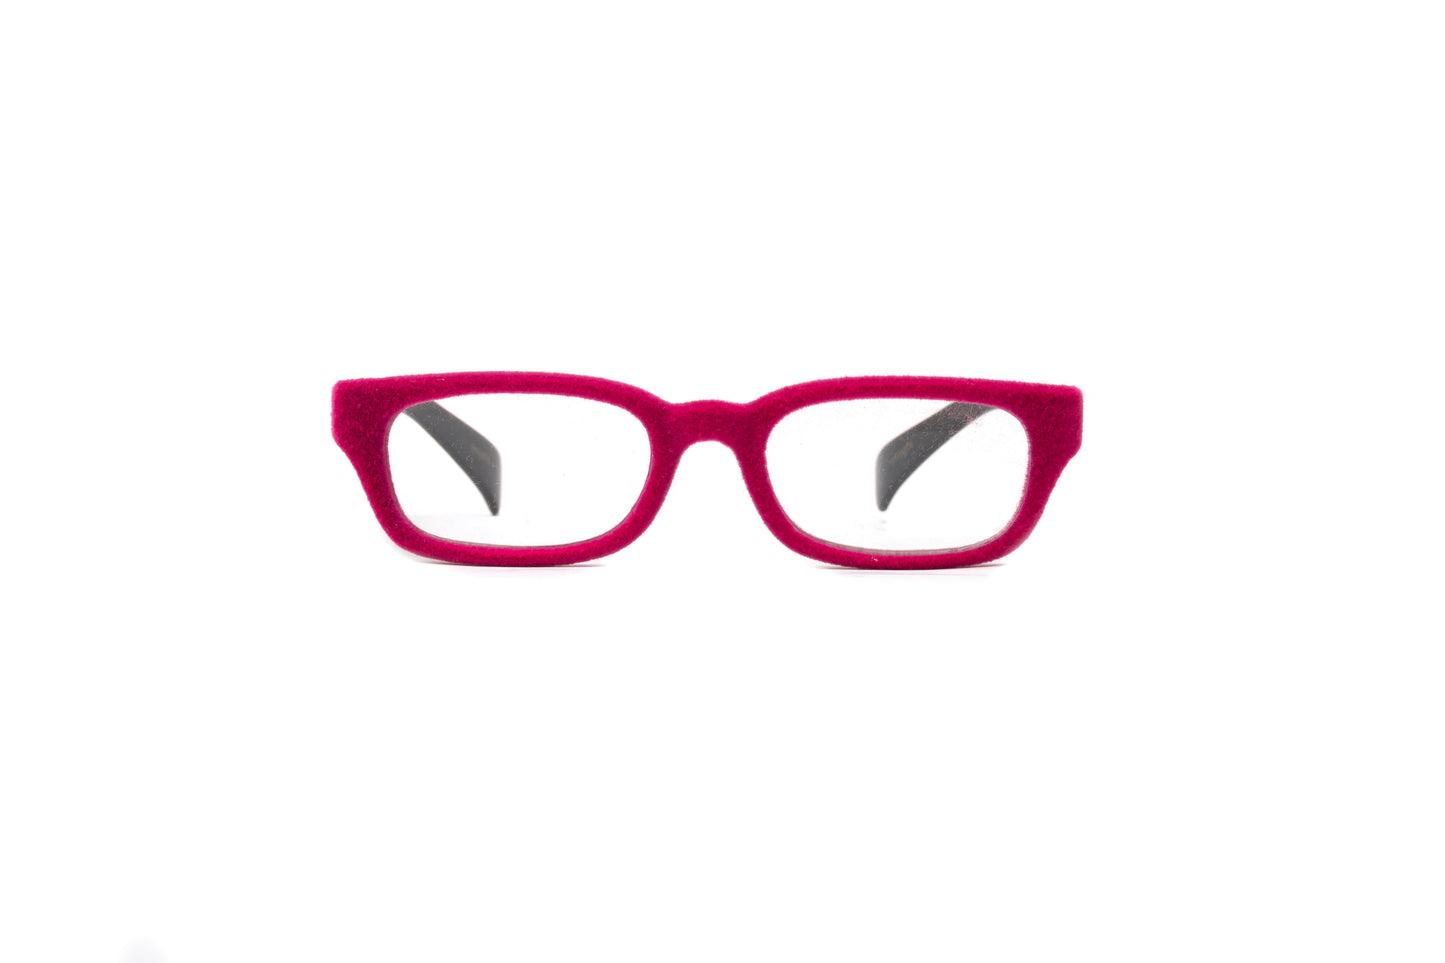 Pink velvet rimmed rectangular reading glasses with matte black temples by Eyejets